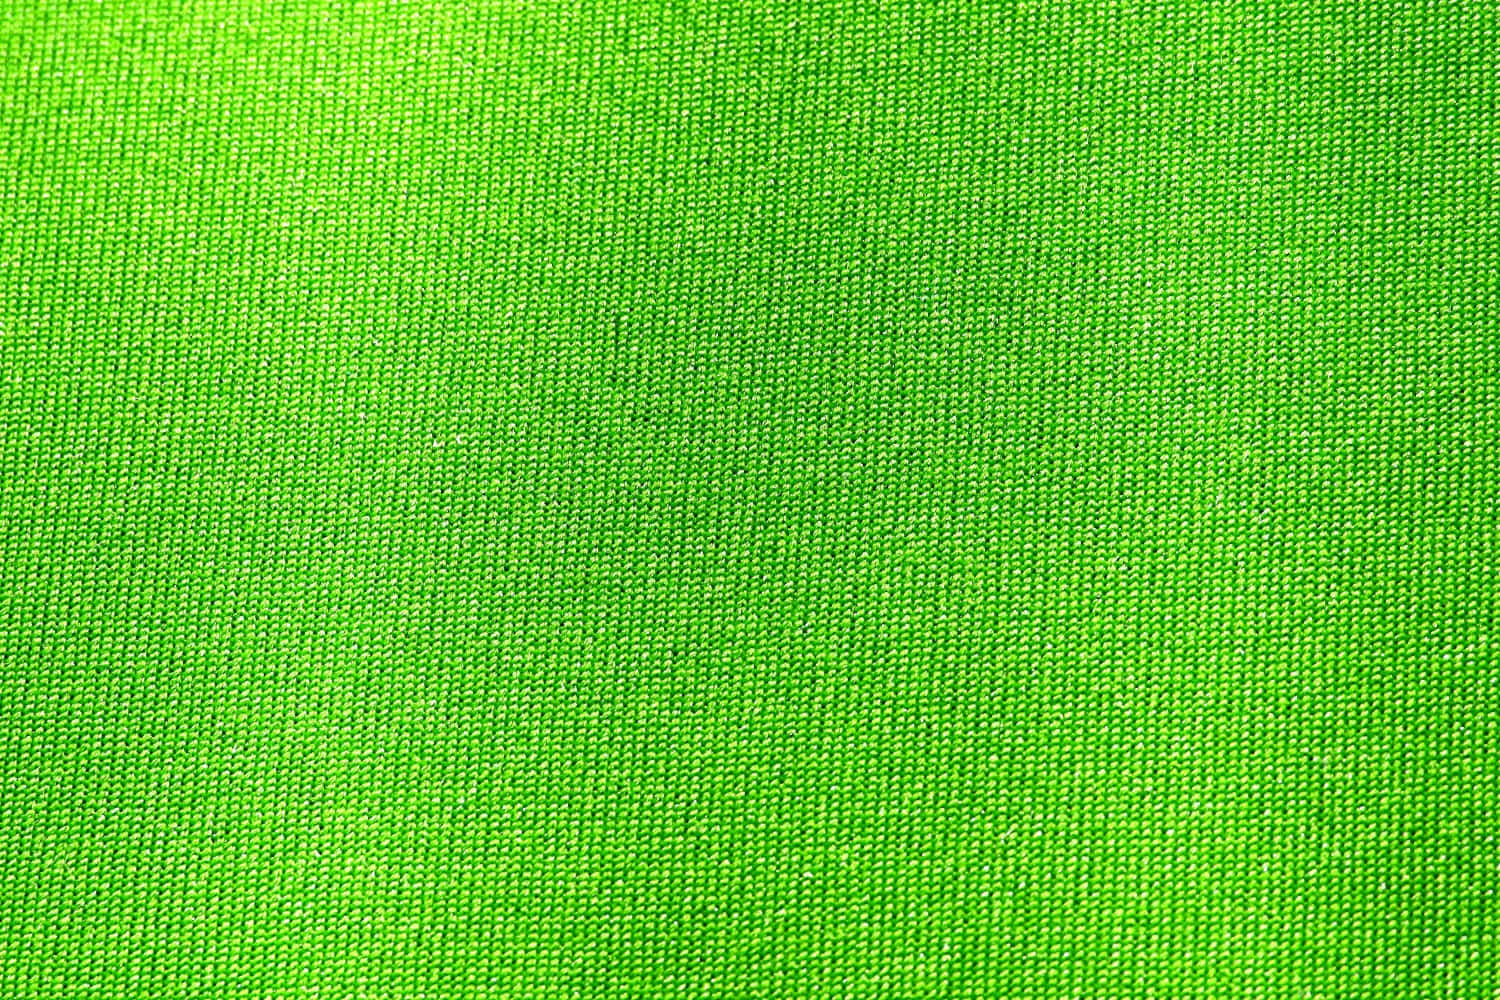 Tygstrukturbild Neon Grön (computer- Eller Mobilbakgrund)